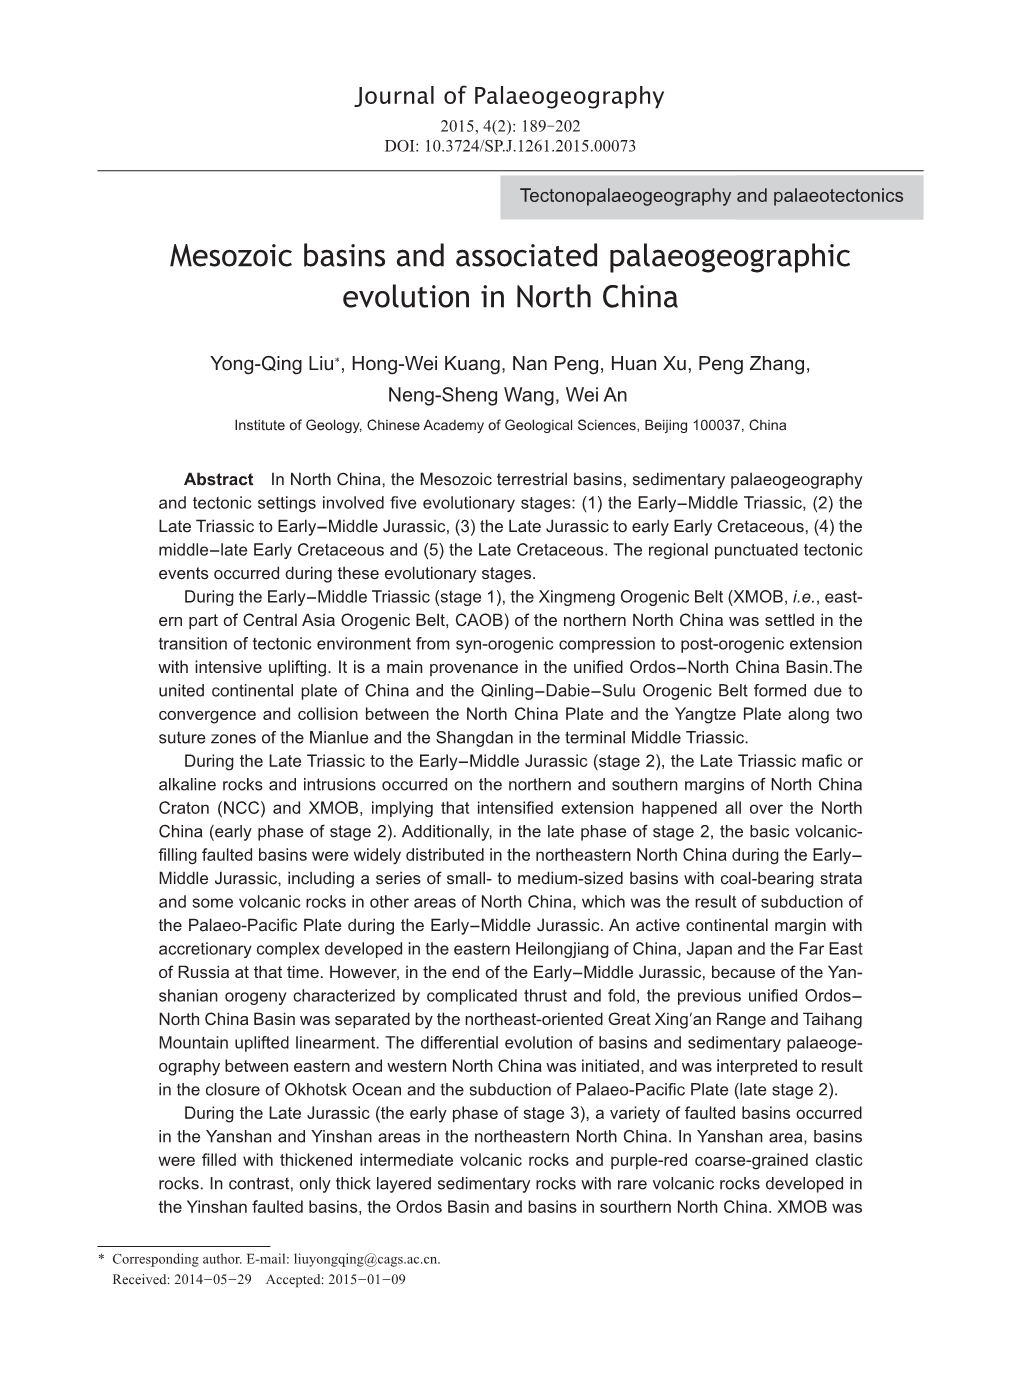 Mesozoic Basins and Associated Palaeogeographic Evolution in North China